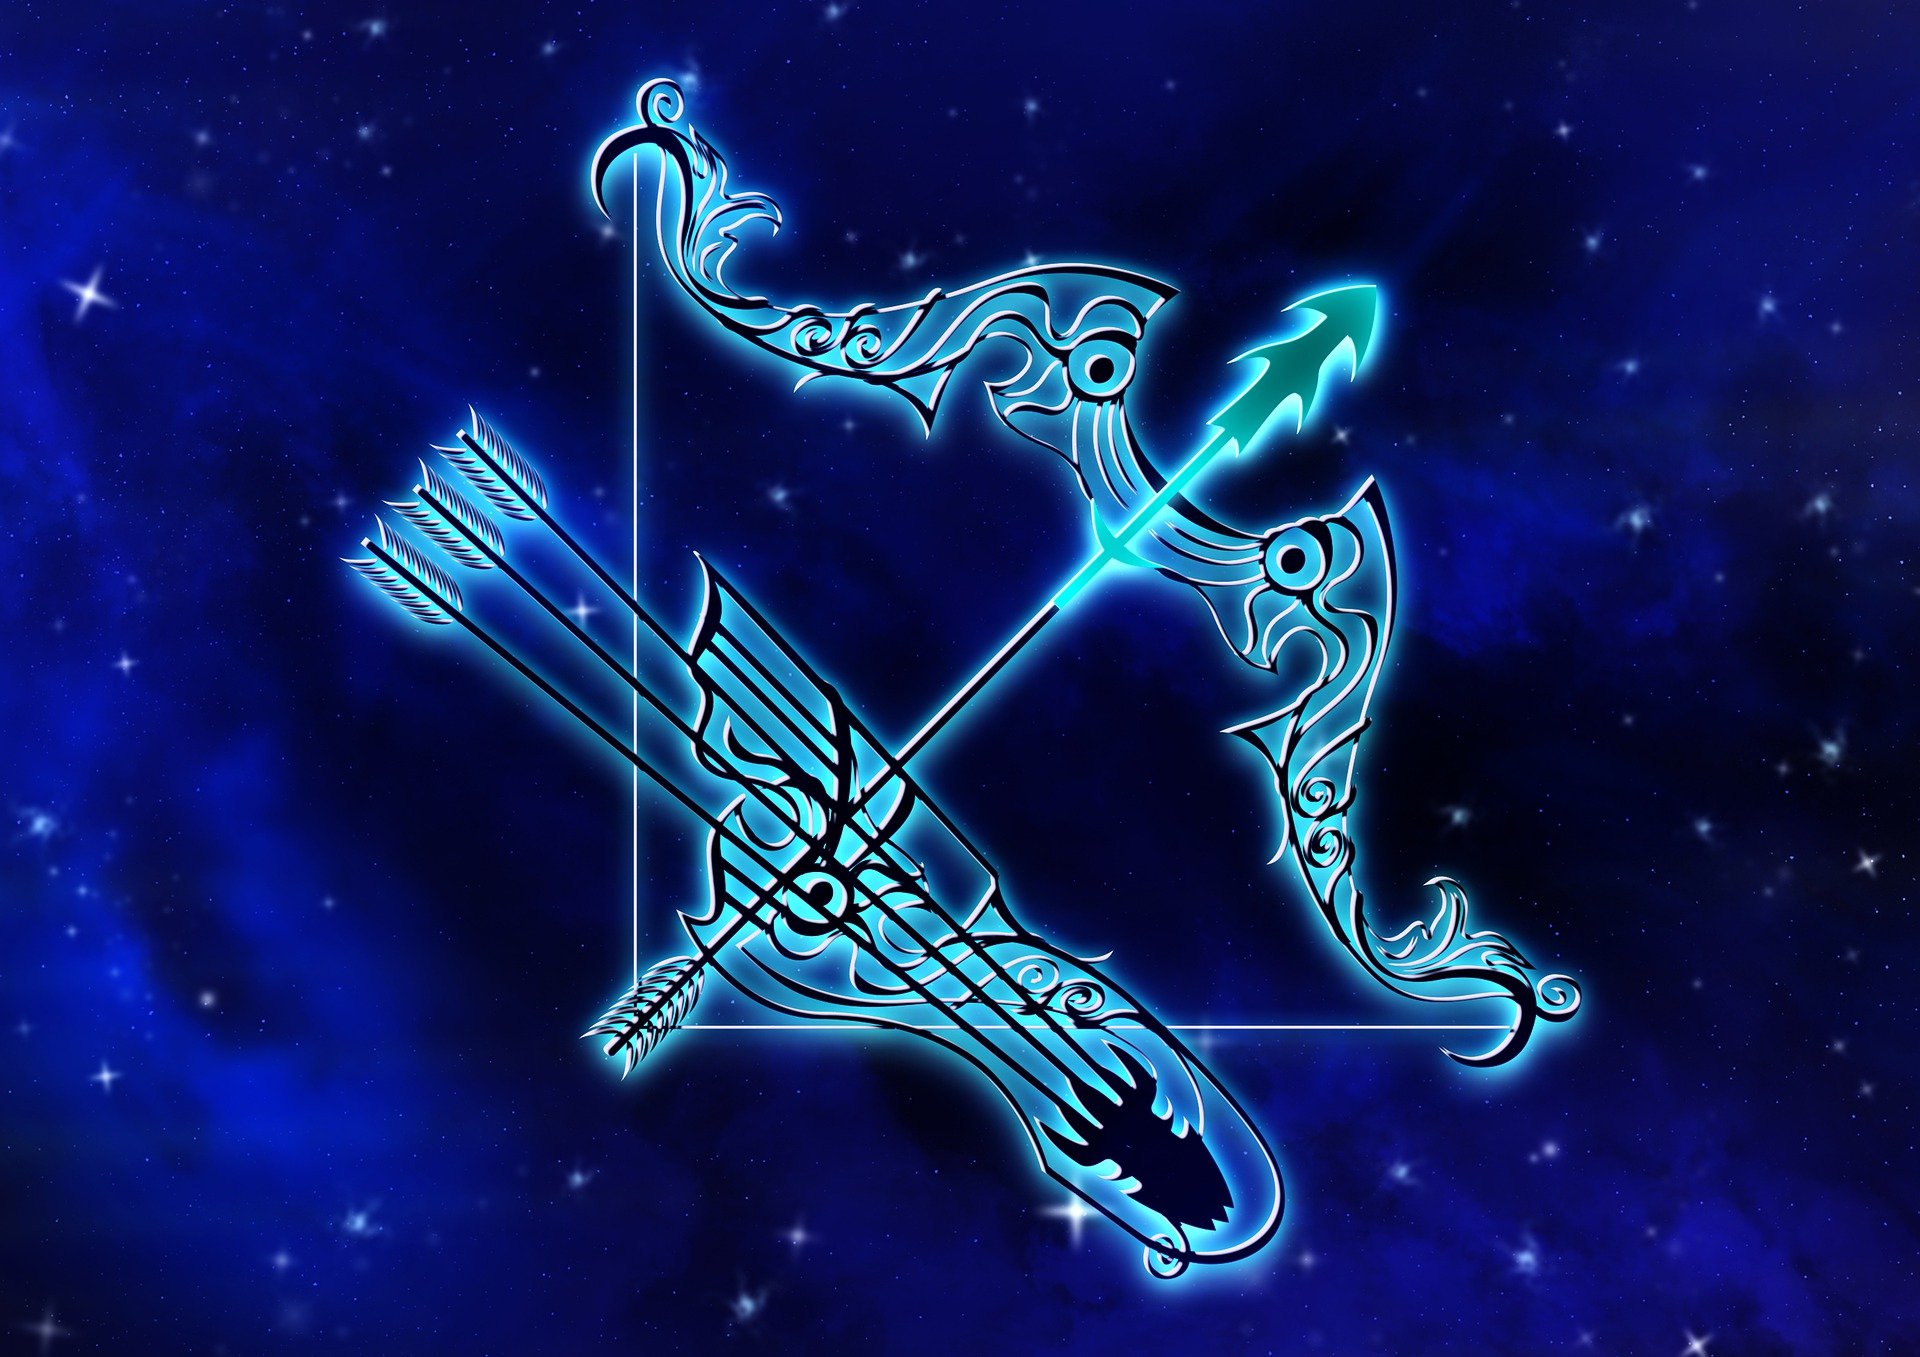 An illustration of a Sagittarius star sign | Source: Pixabay 